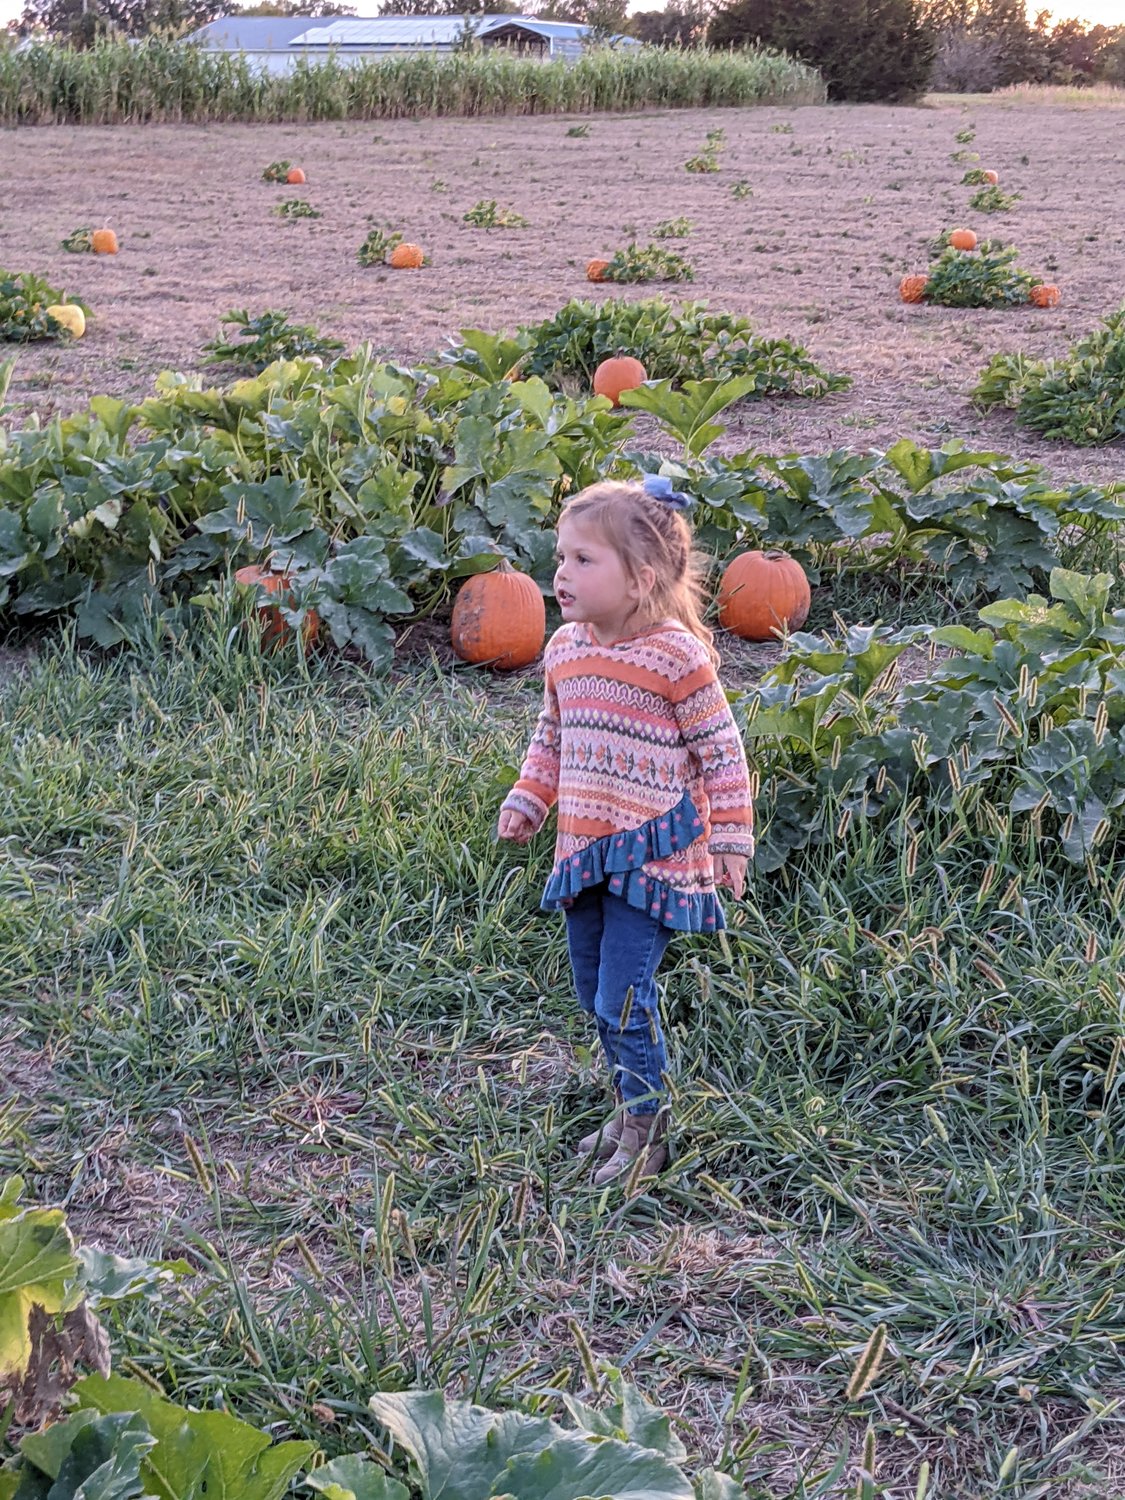 Looking for the perfect pumpkin, Grace Swortwood surveys the pumpkin patch at 83 and Vine Farm.